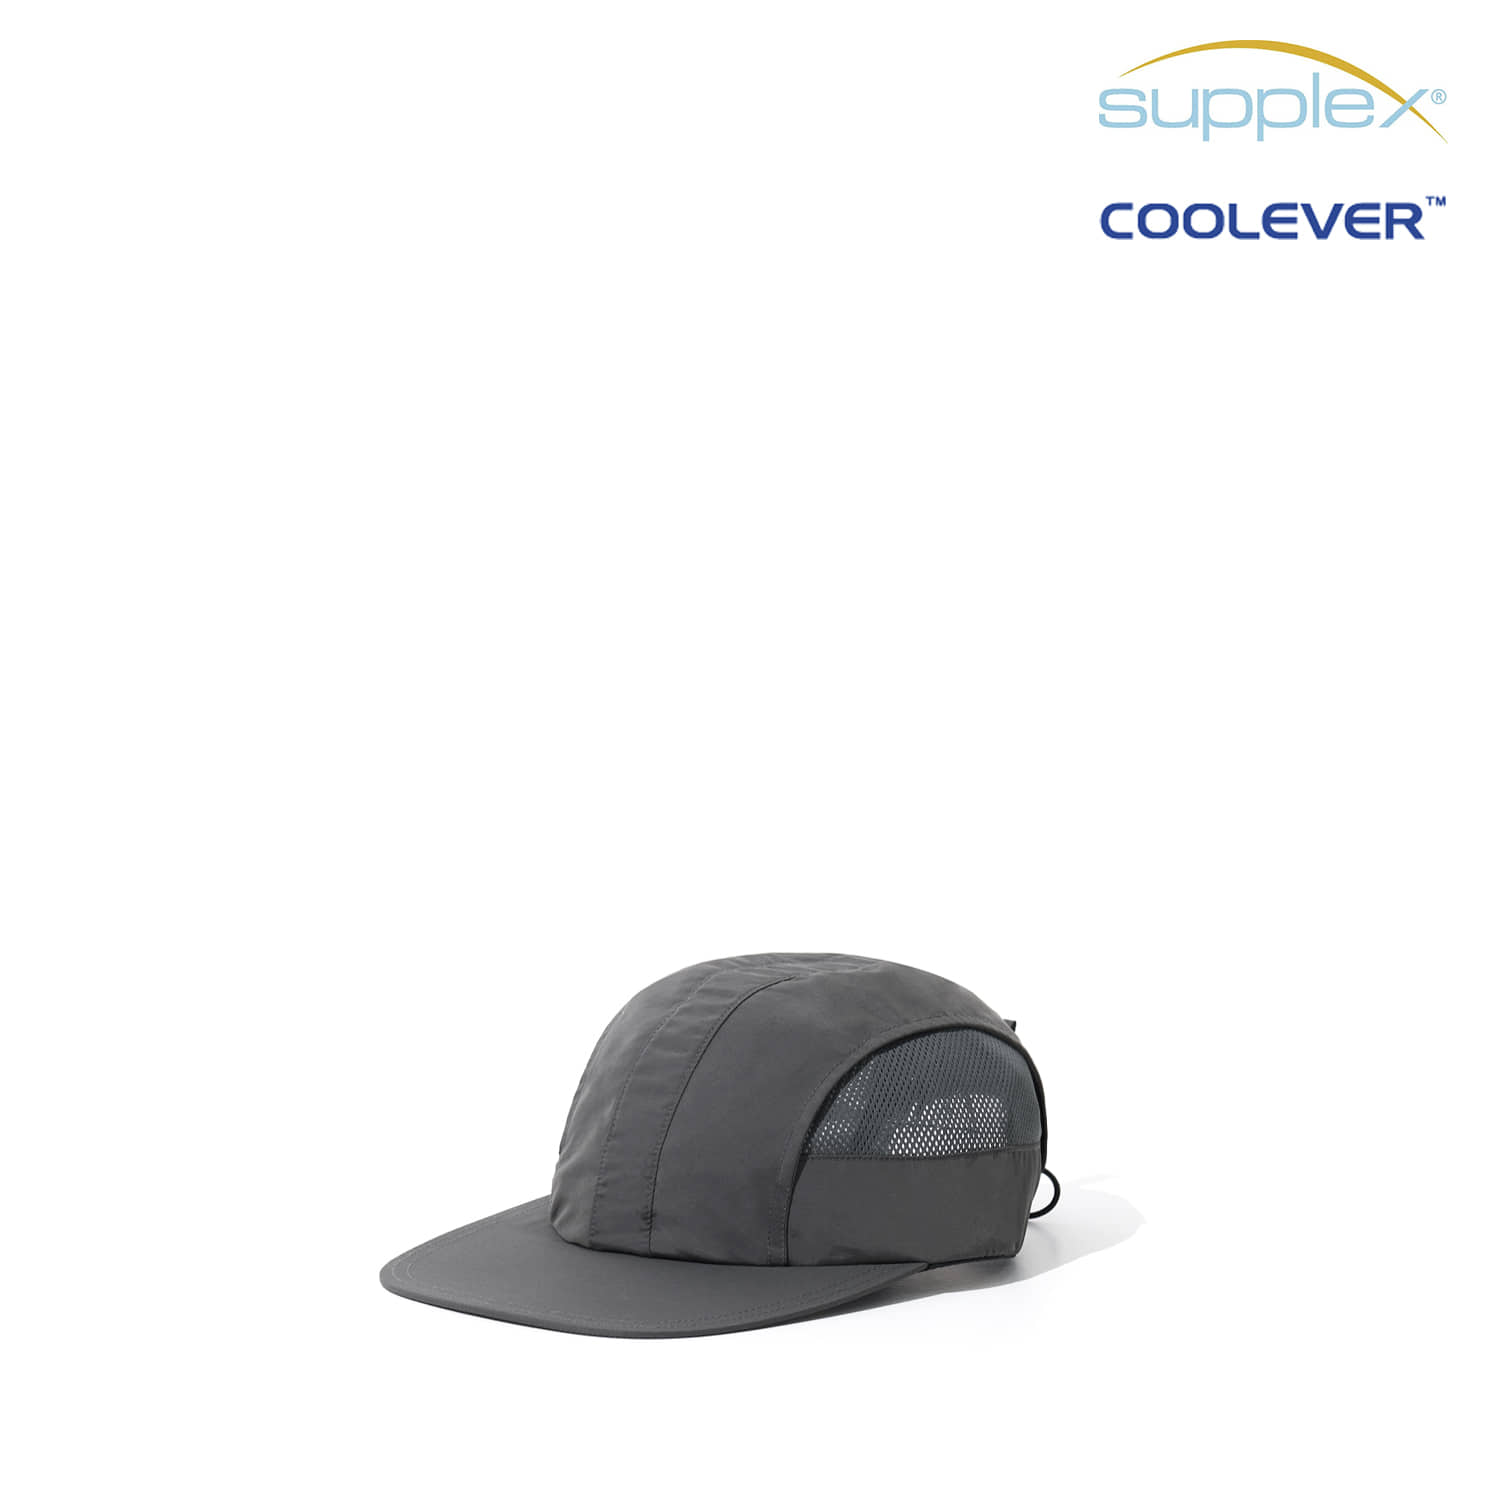 WORTHWHILE MOVEMENT월스와일무브먼트 Beetle Cap (Dark Gray) Supplex® & Coolever™